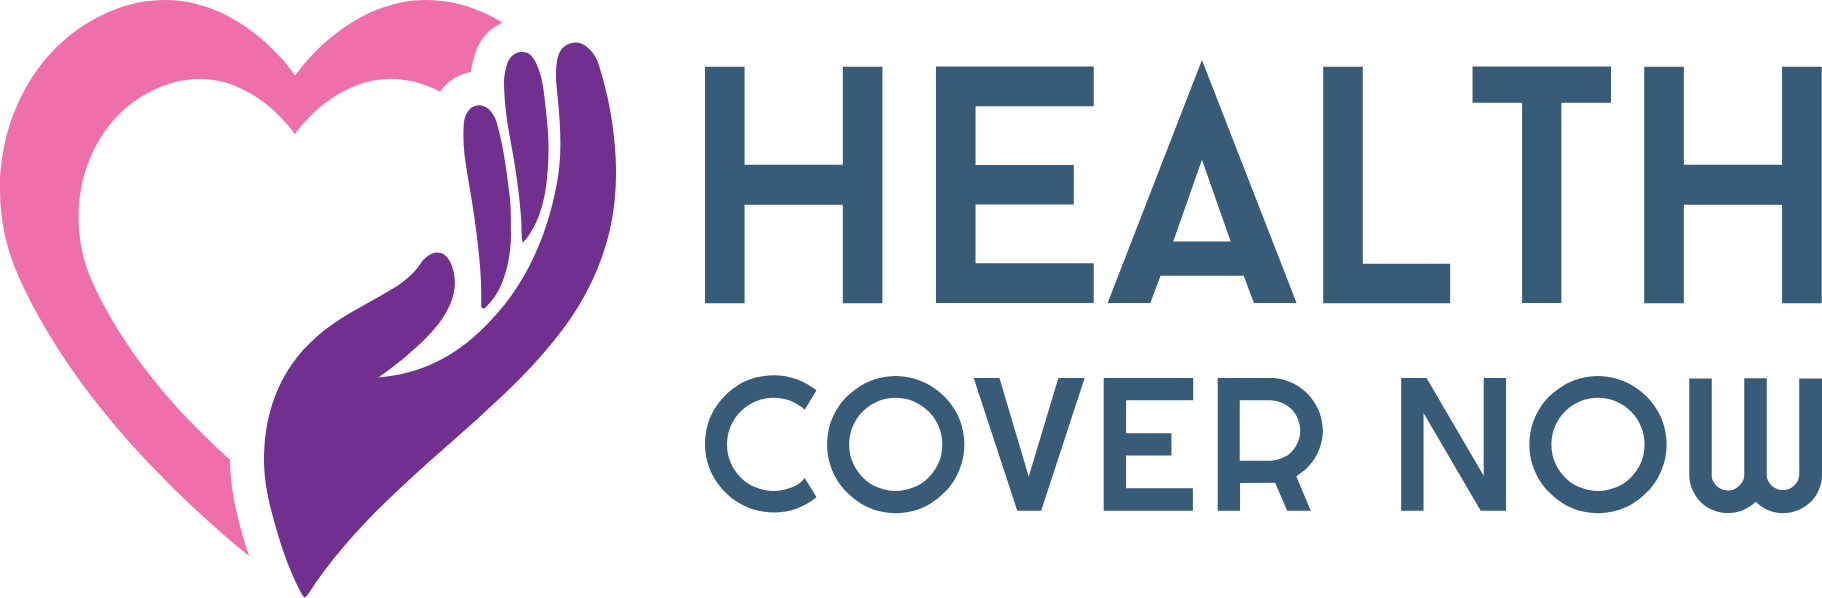 Health cover now logo